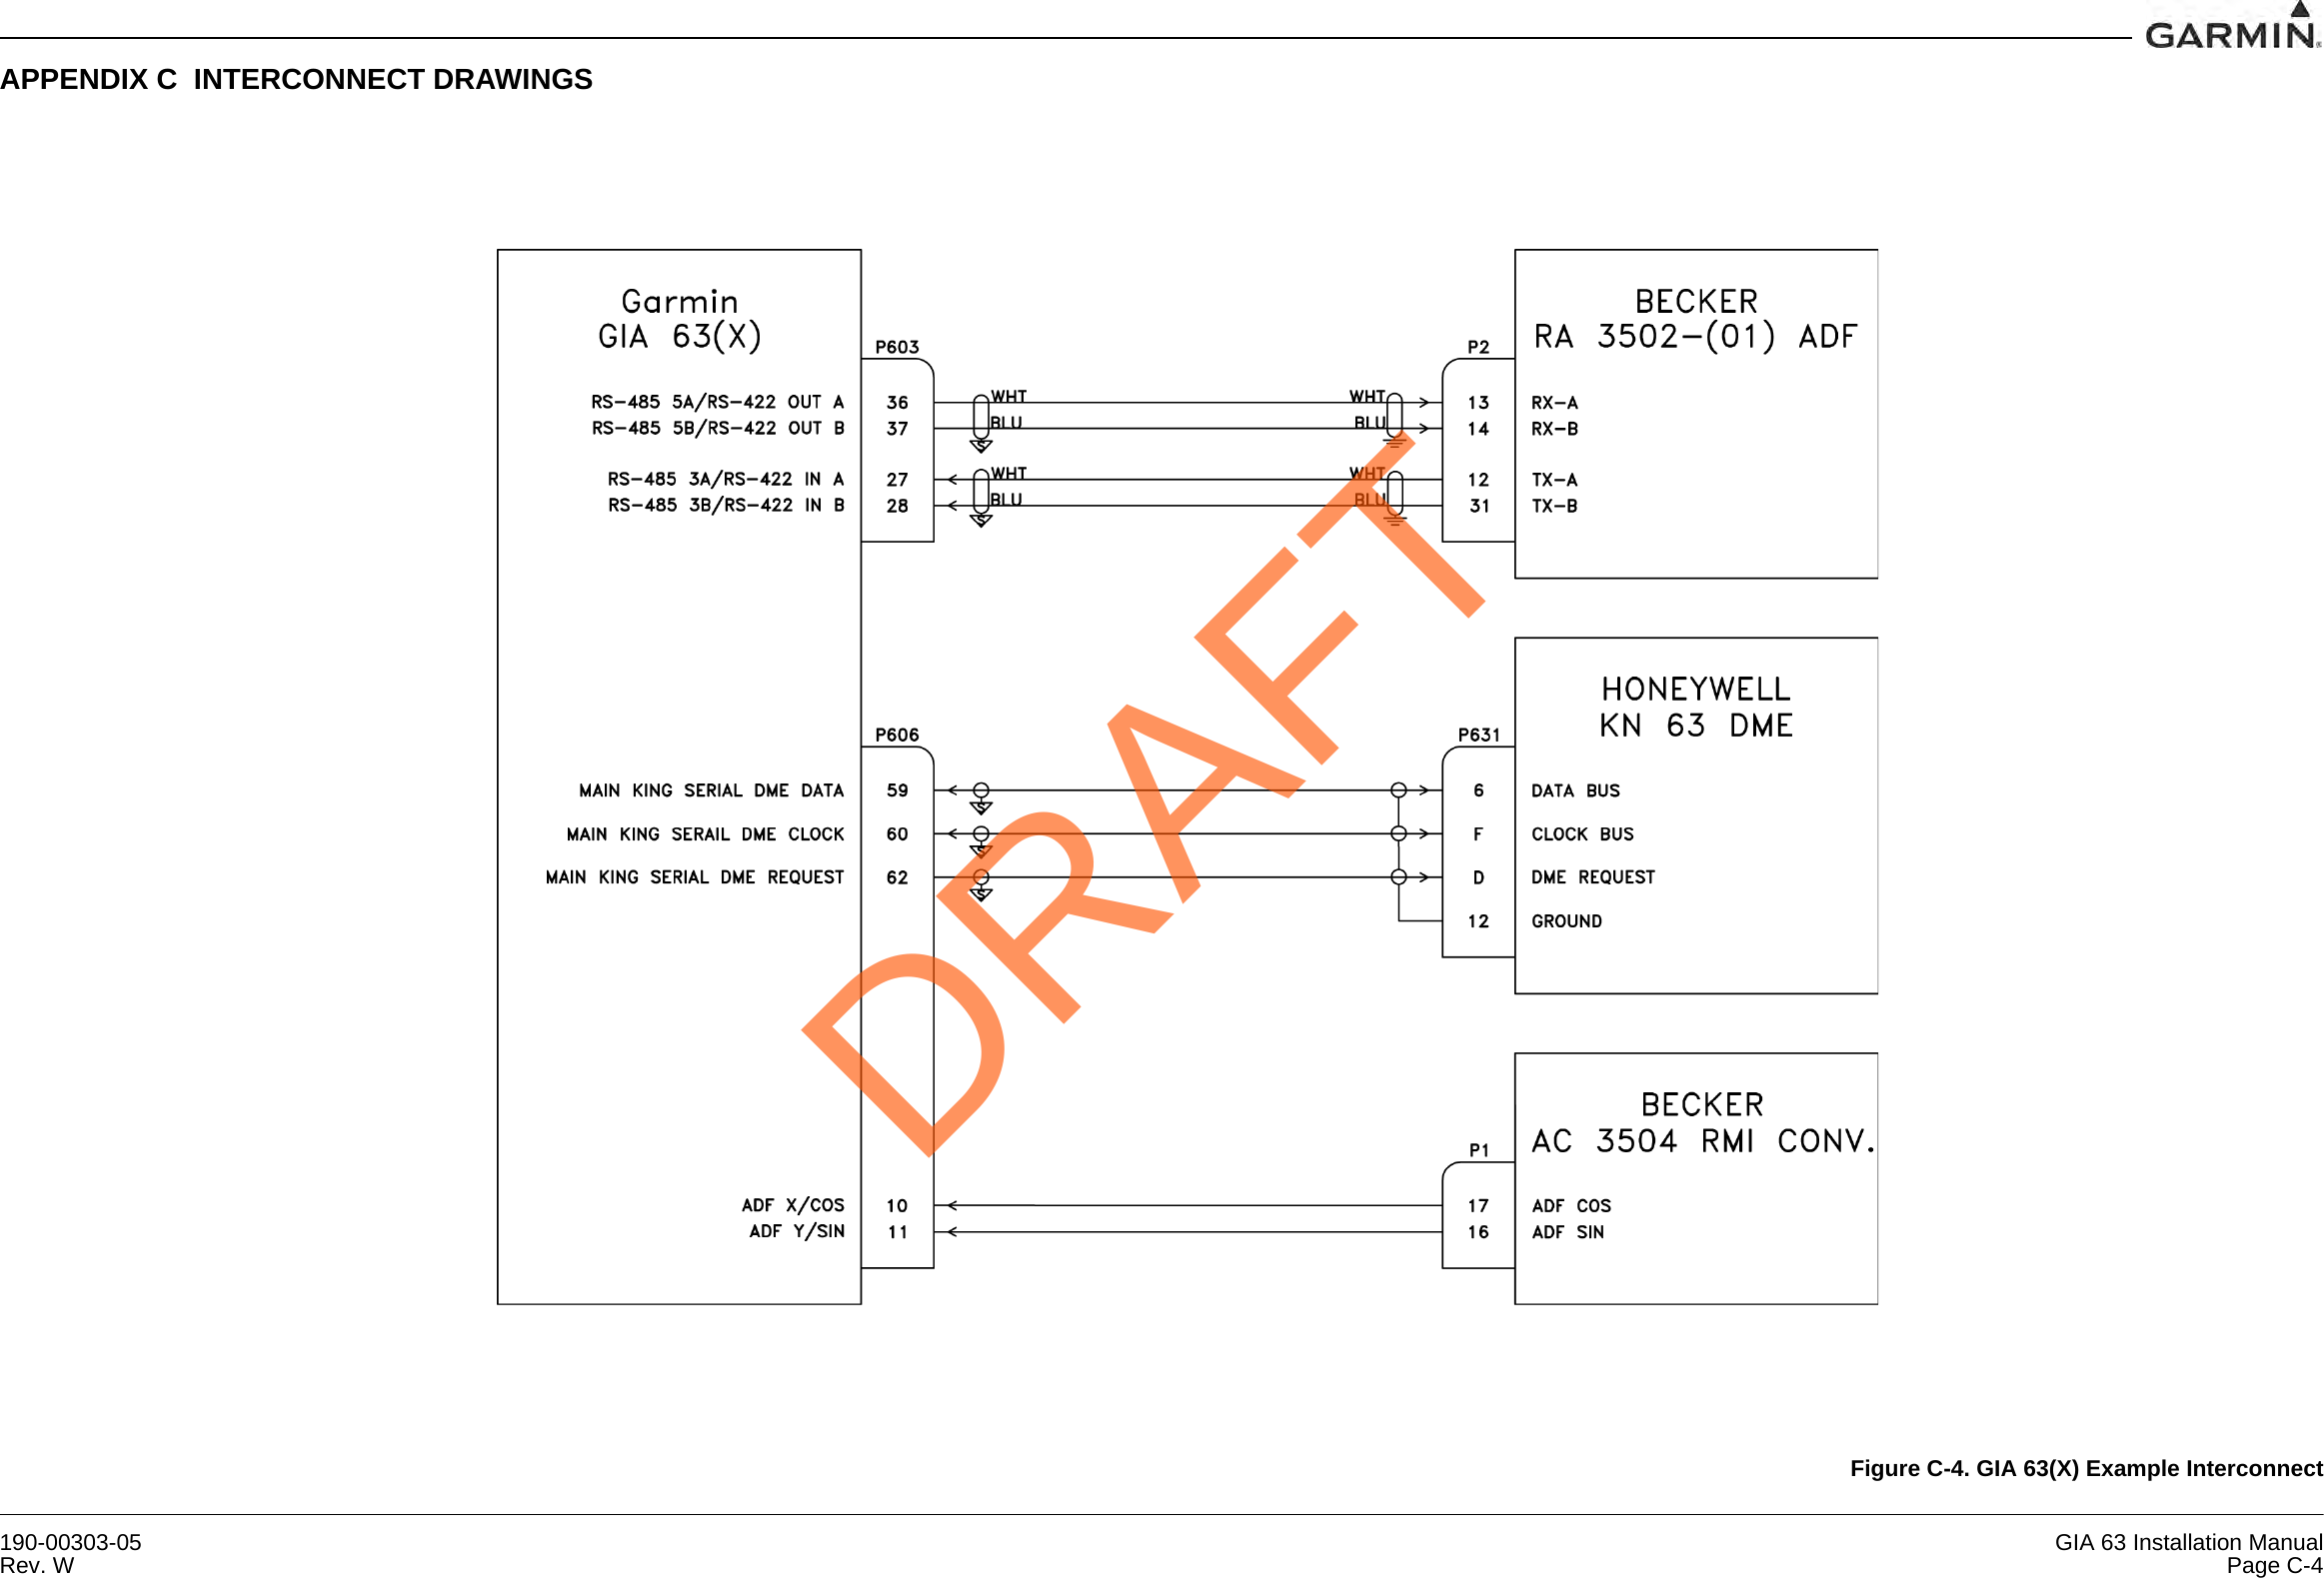 190-00303-05 GIA 63 Installation ManualRev. W Page C-4APPENDIX C  INTERCONNECT DRAWINGSFigure C-4. GIA 63(X) Example InterconnectDRAFT